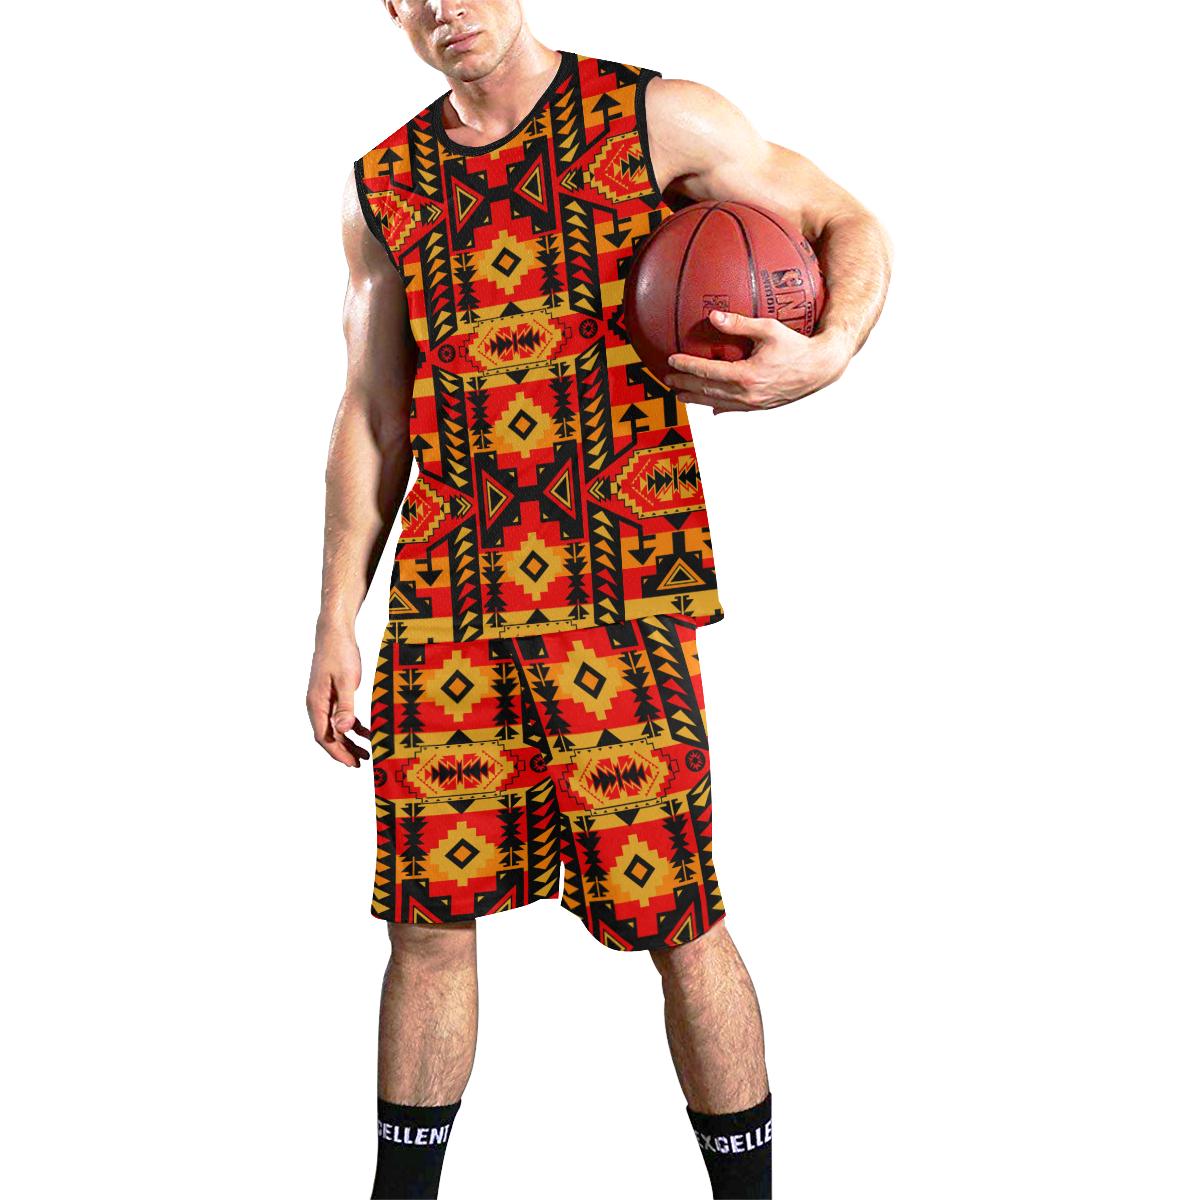 Chiefs Mountain Fire All Over Print Basketball Uniform Basketball Uniform e-joyer 